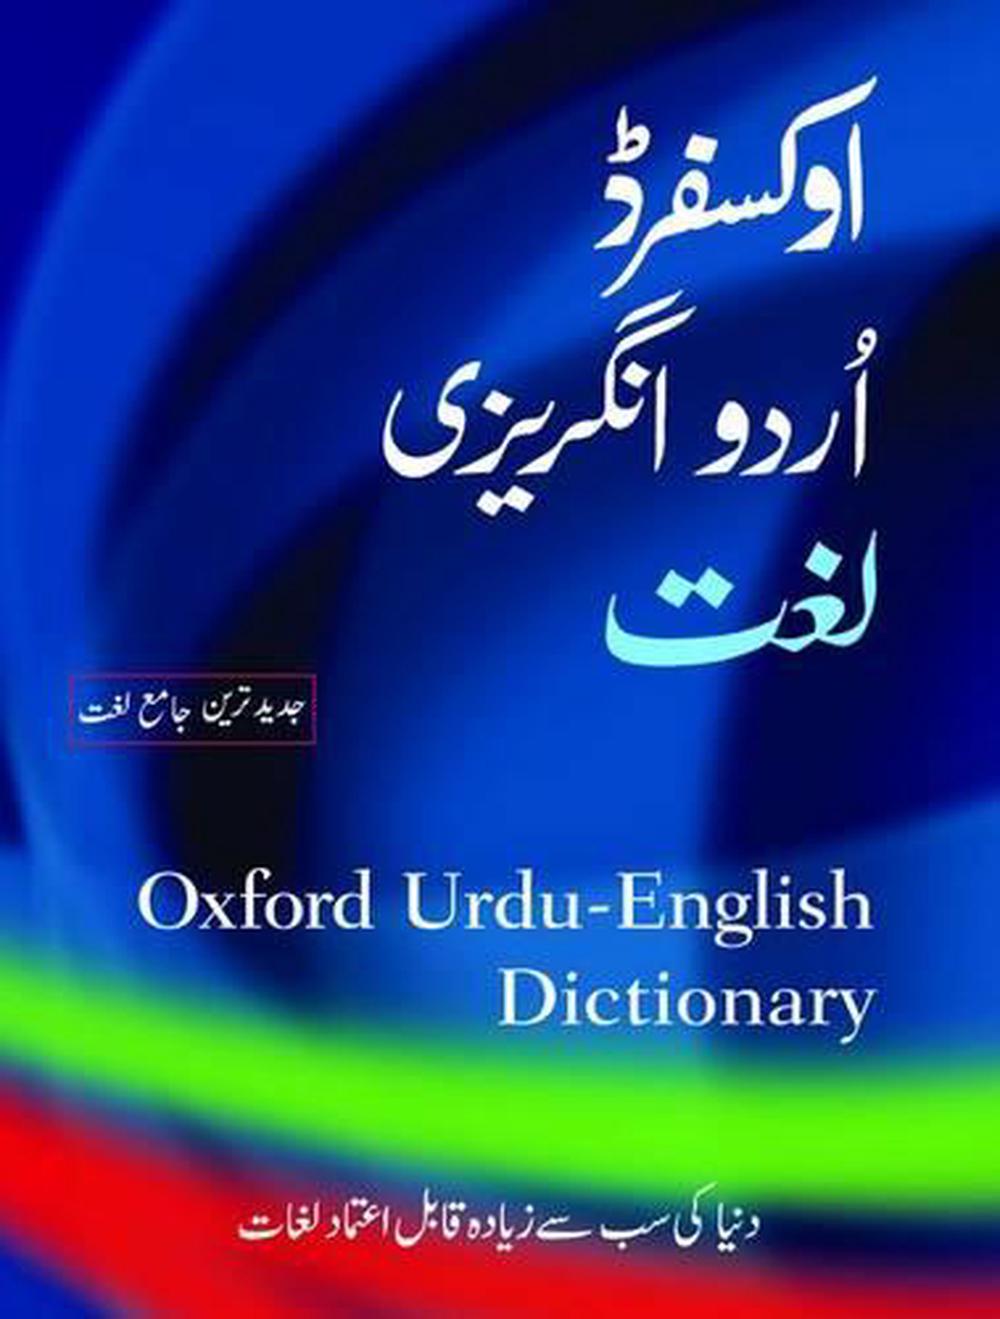 u dictionary english to urdu